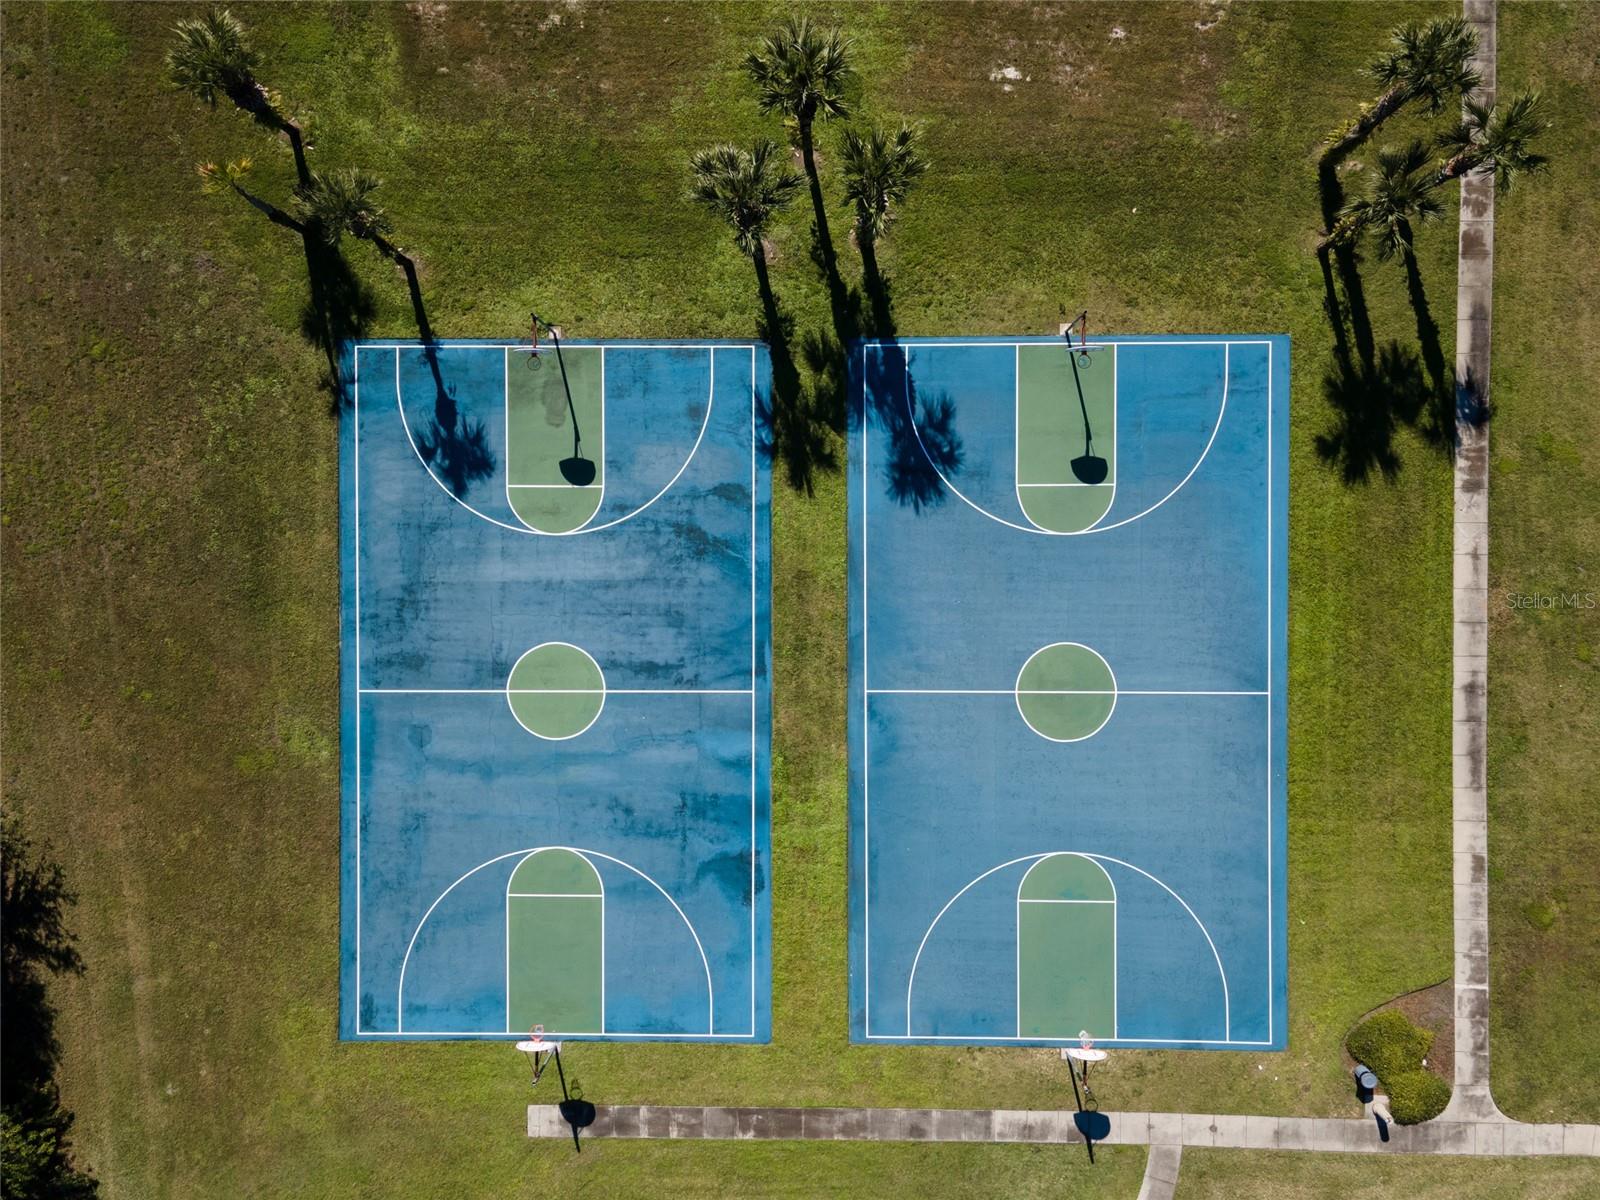 Community Basketball